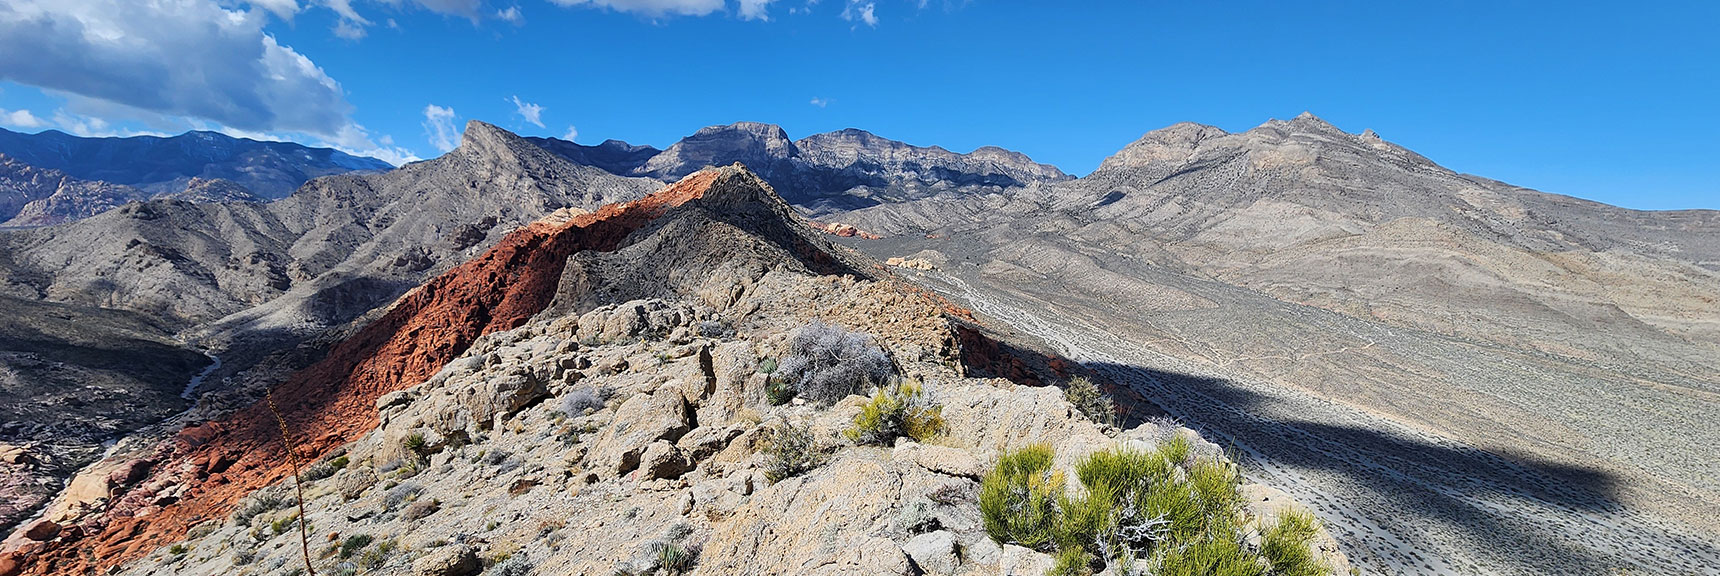 Damsel Peak on the Right Across Brownstone Basin. | Gray Cap Ridge Southeast Summit | La Madre Mountains Wilderness, Nevada